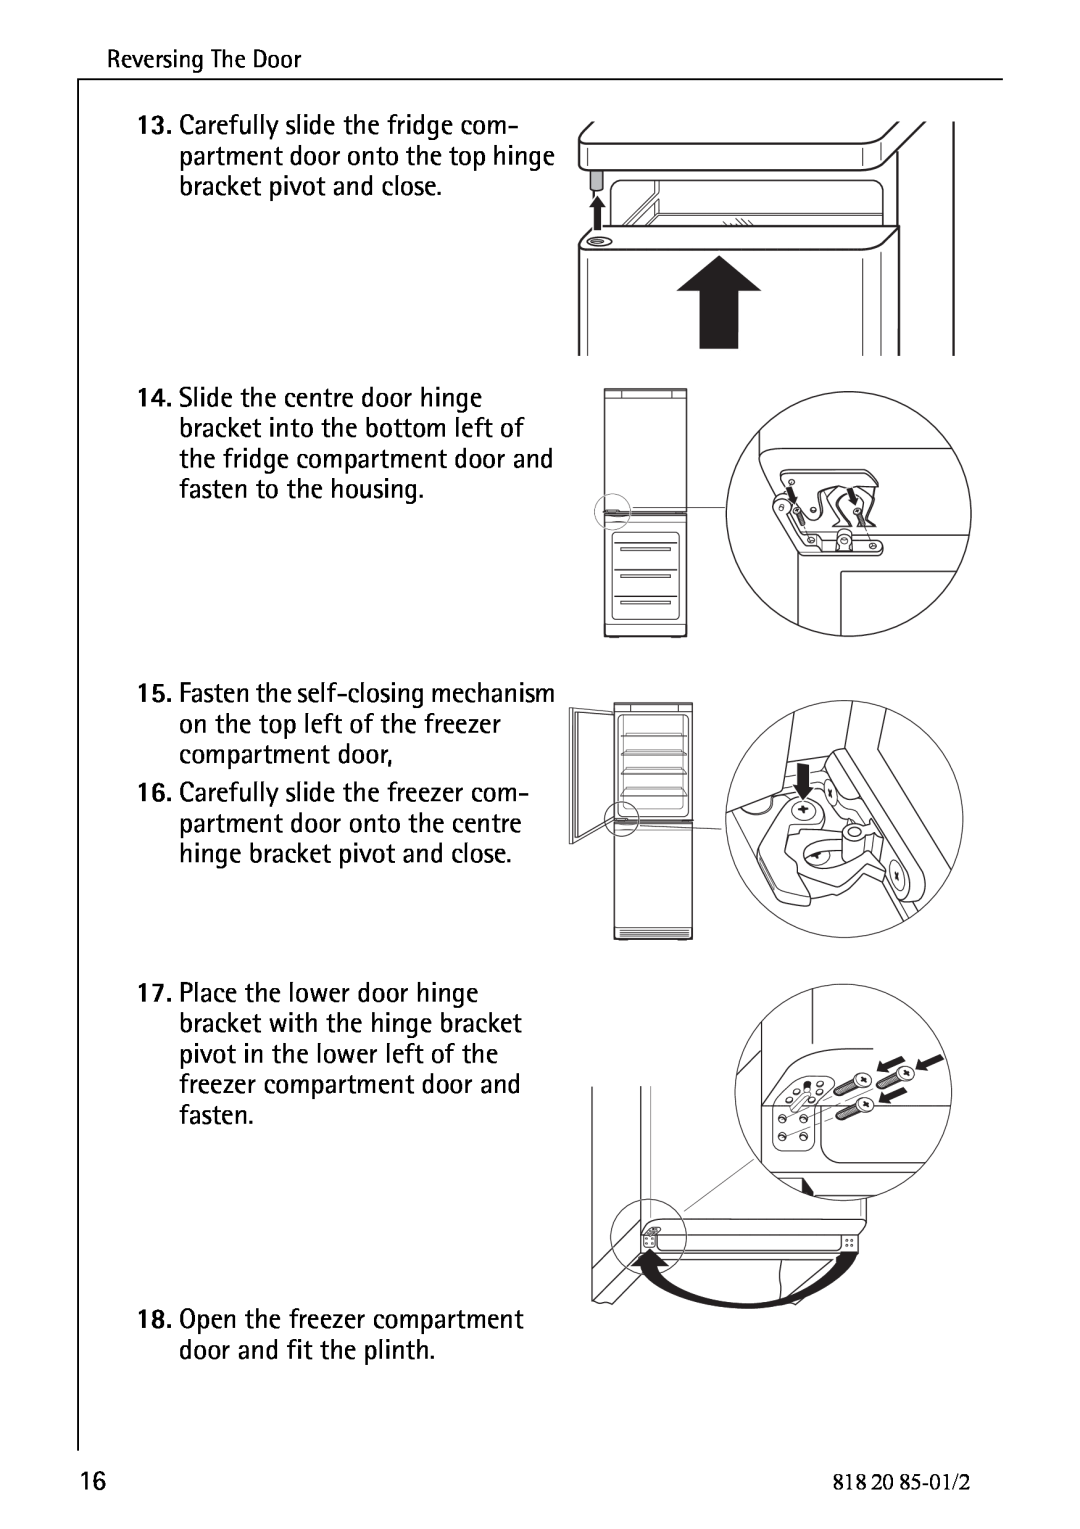 Electrolux 818 20 85 Carefully slide the fridge com- partment door onto the top hinge bracket pivot and close 